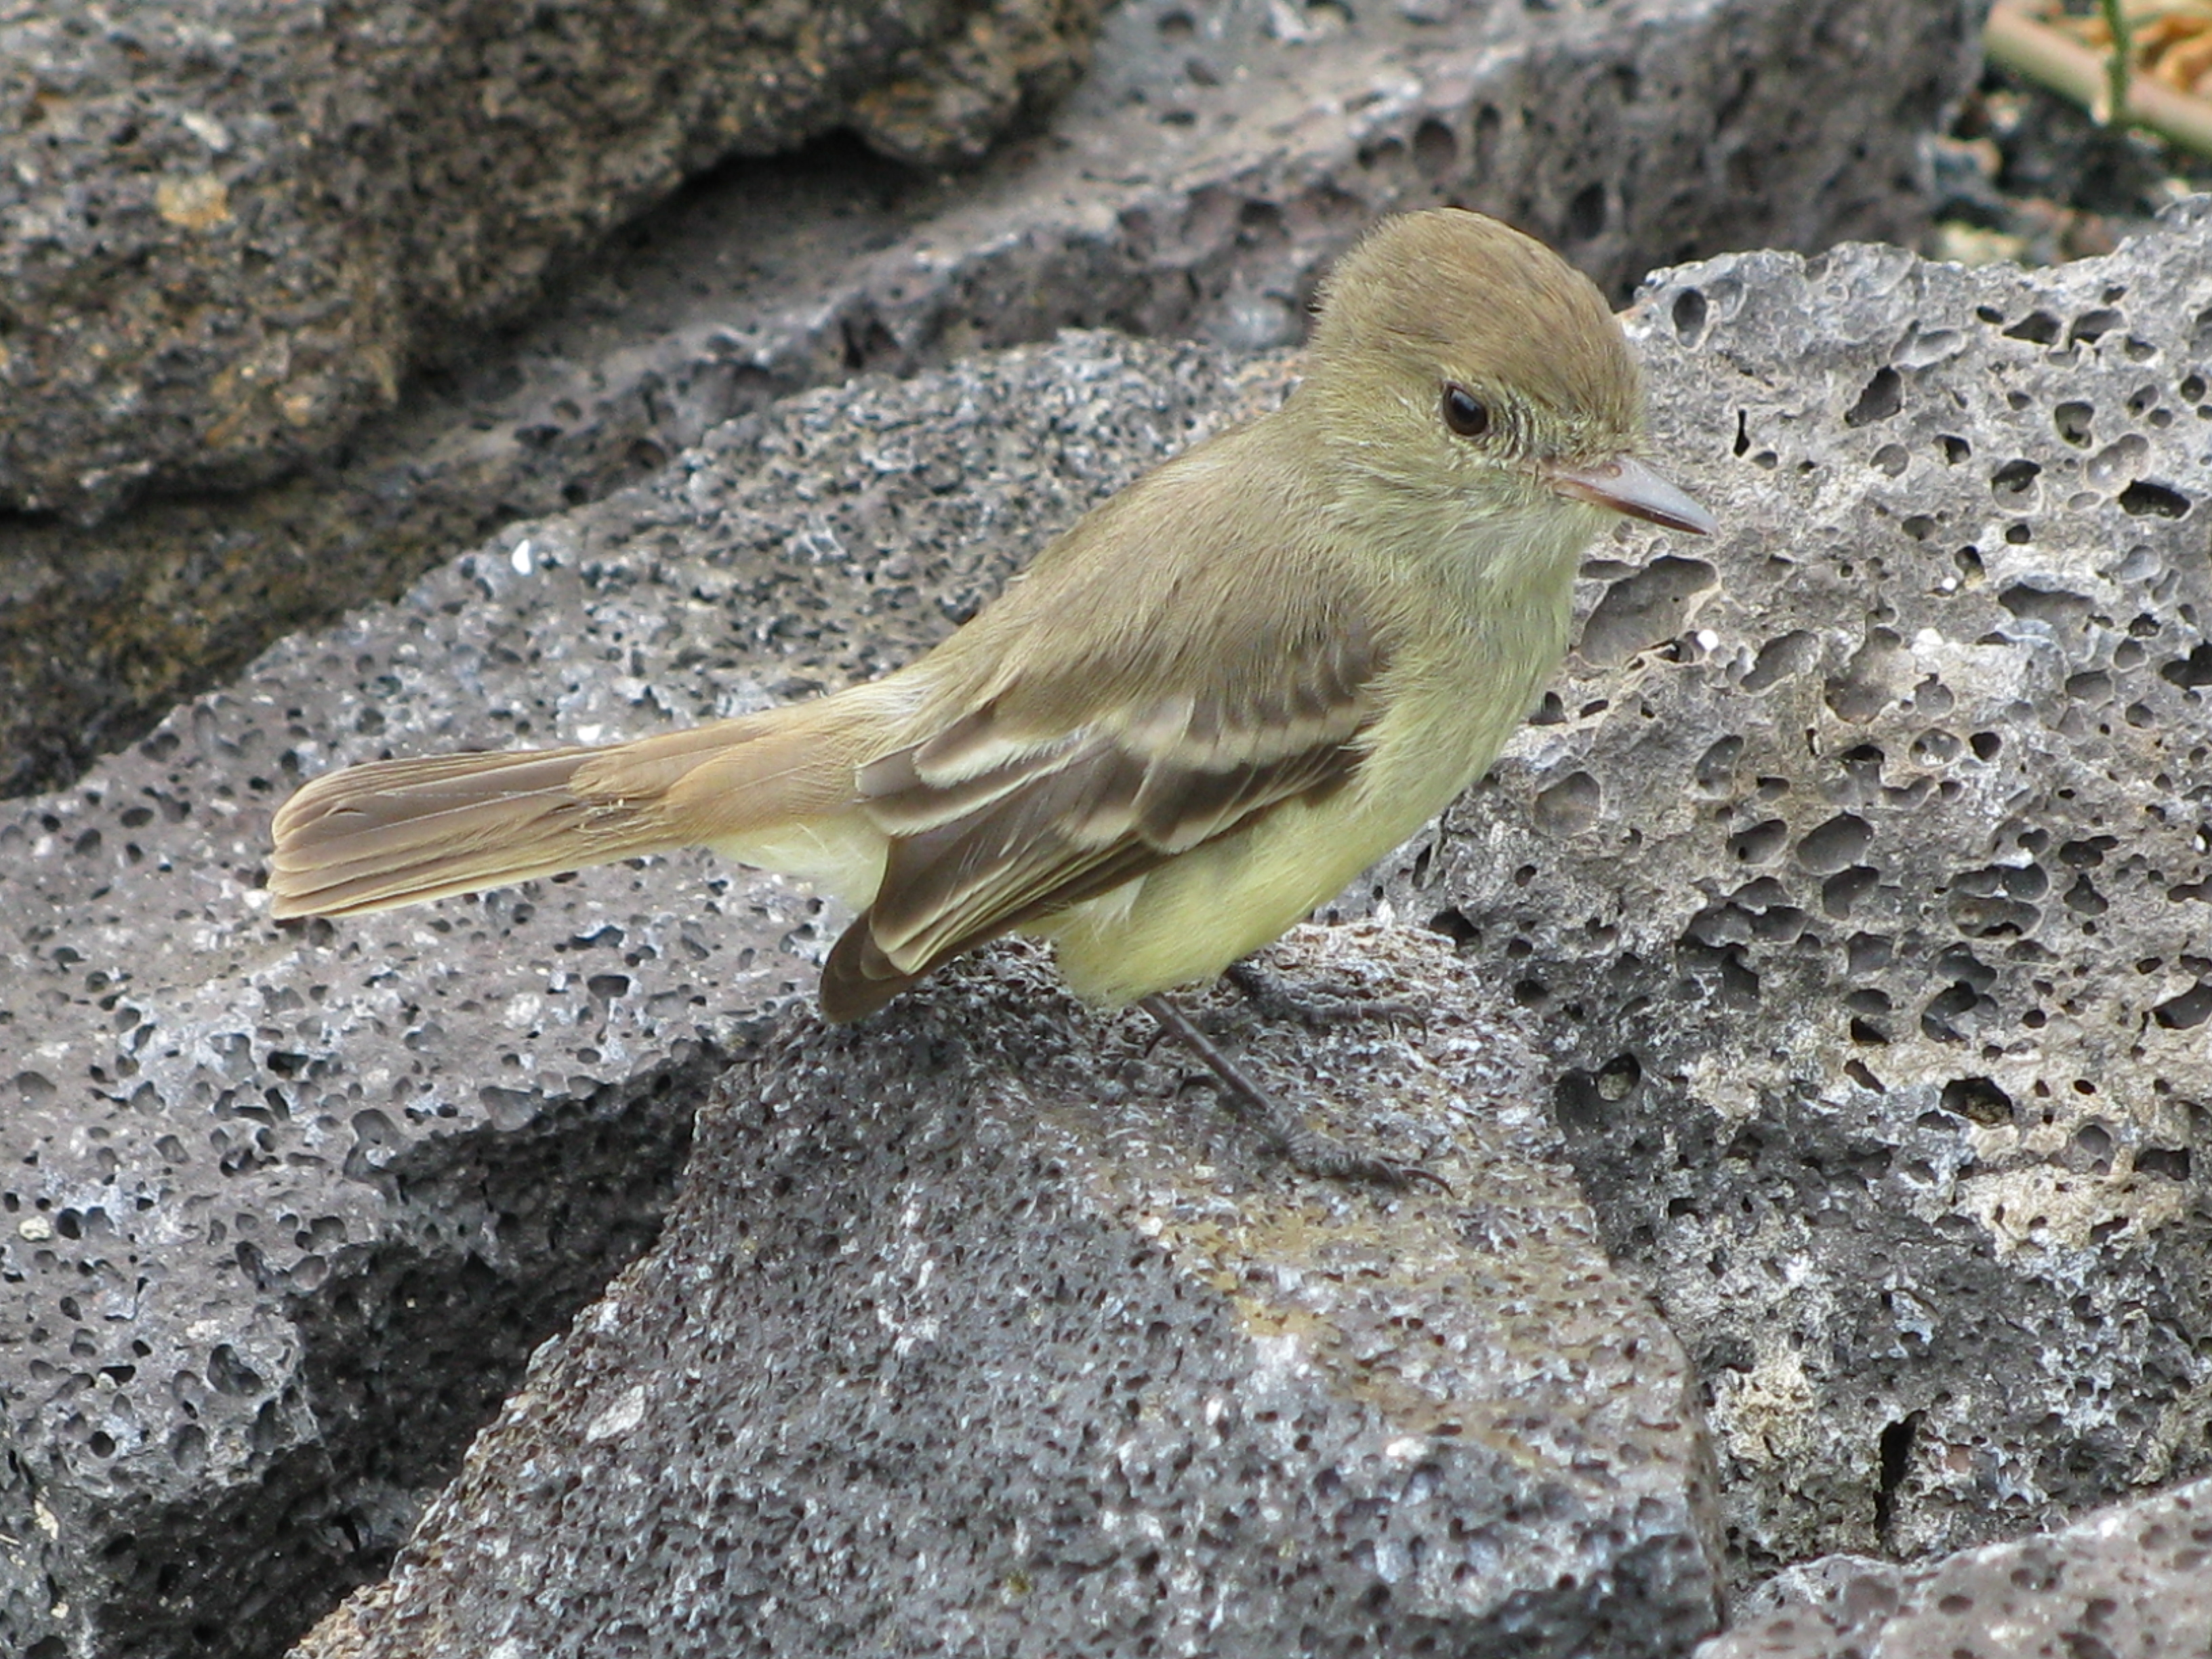 yellow finch